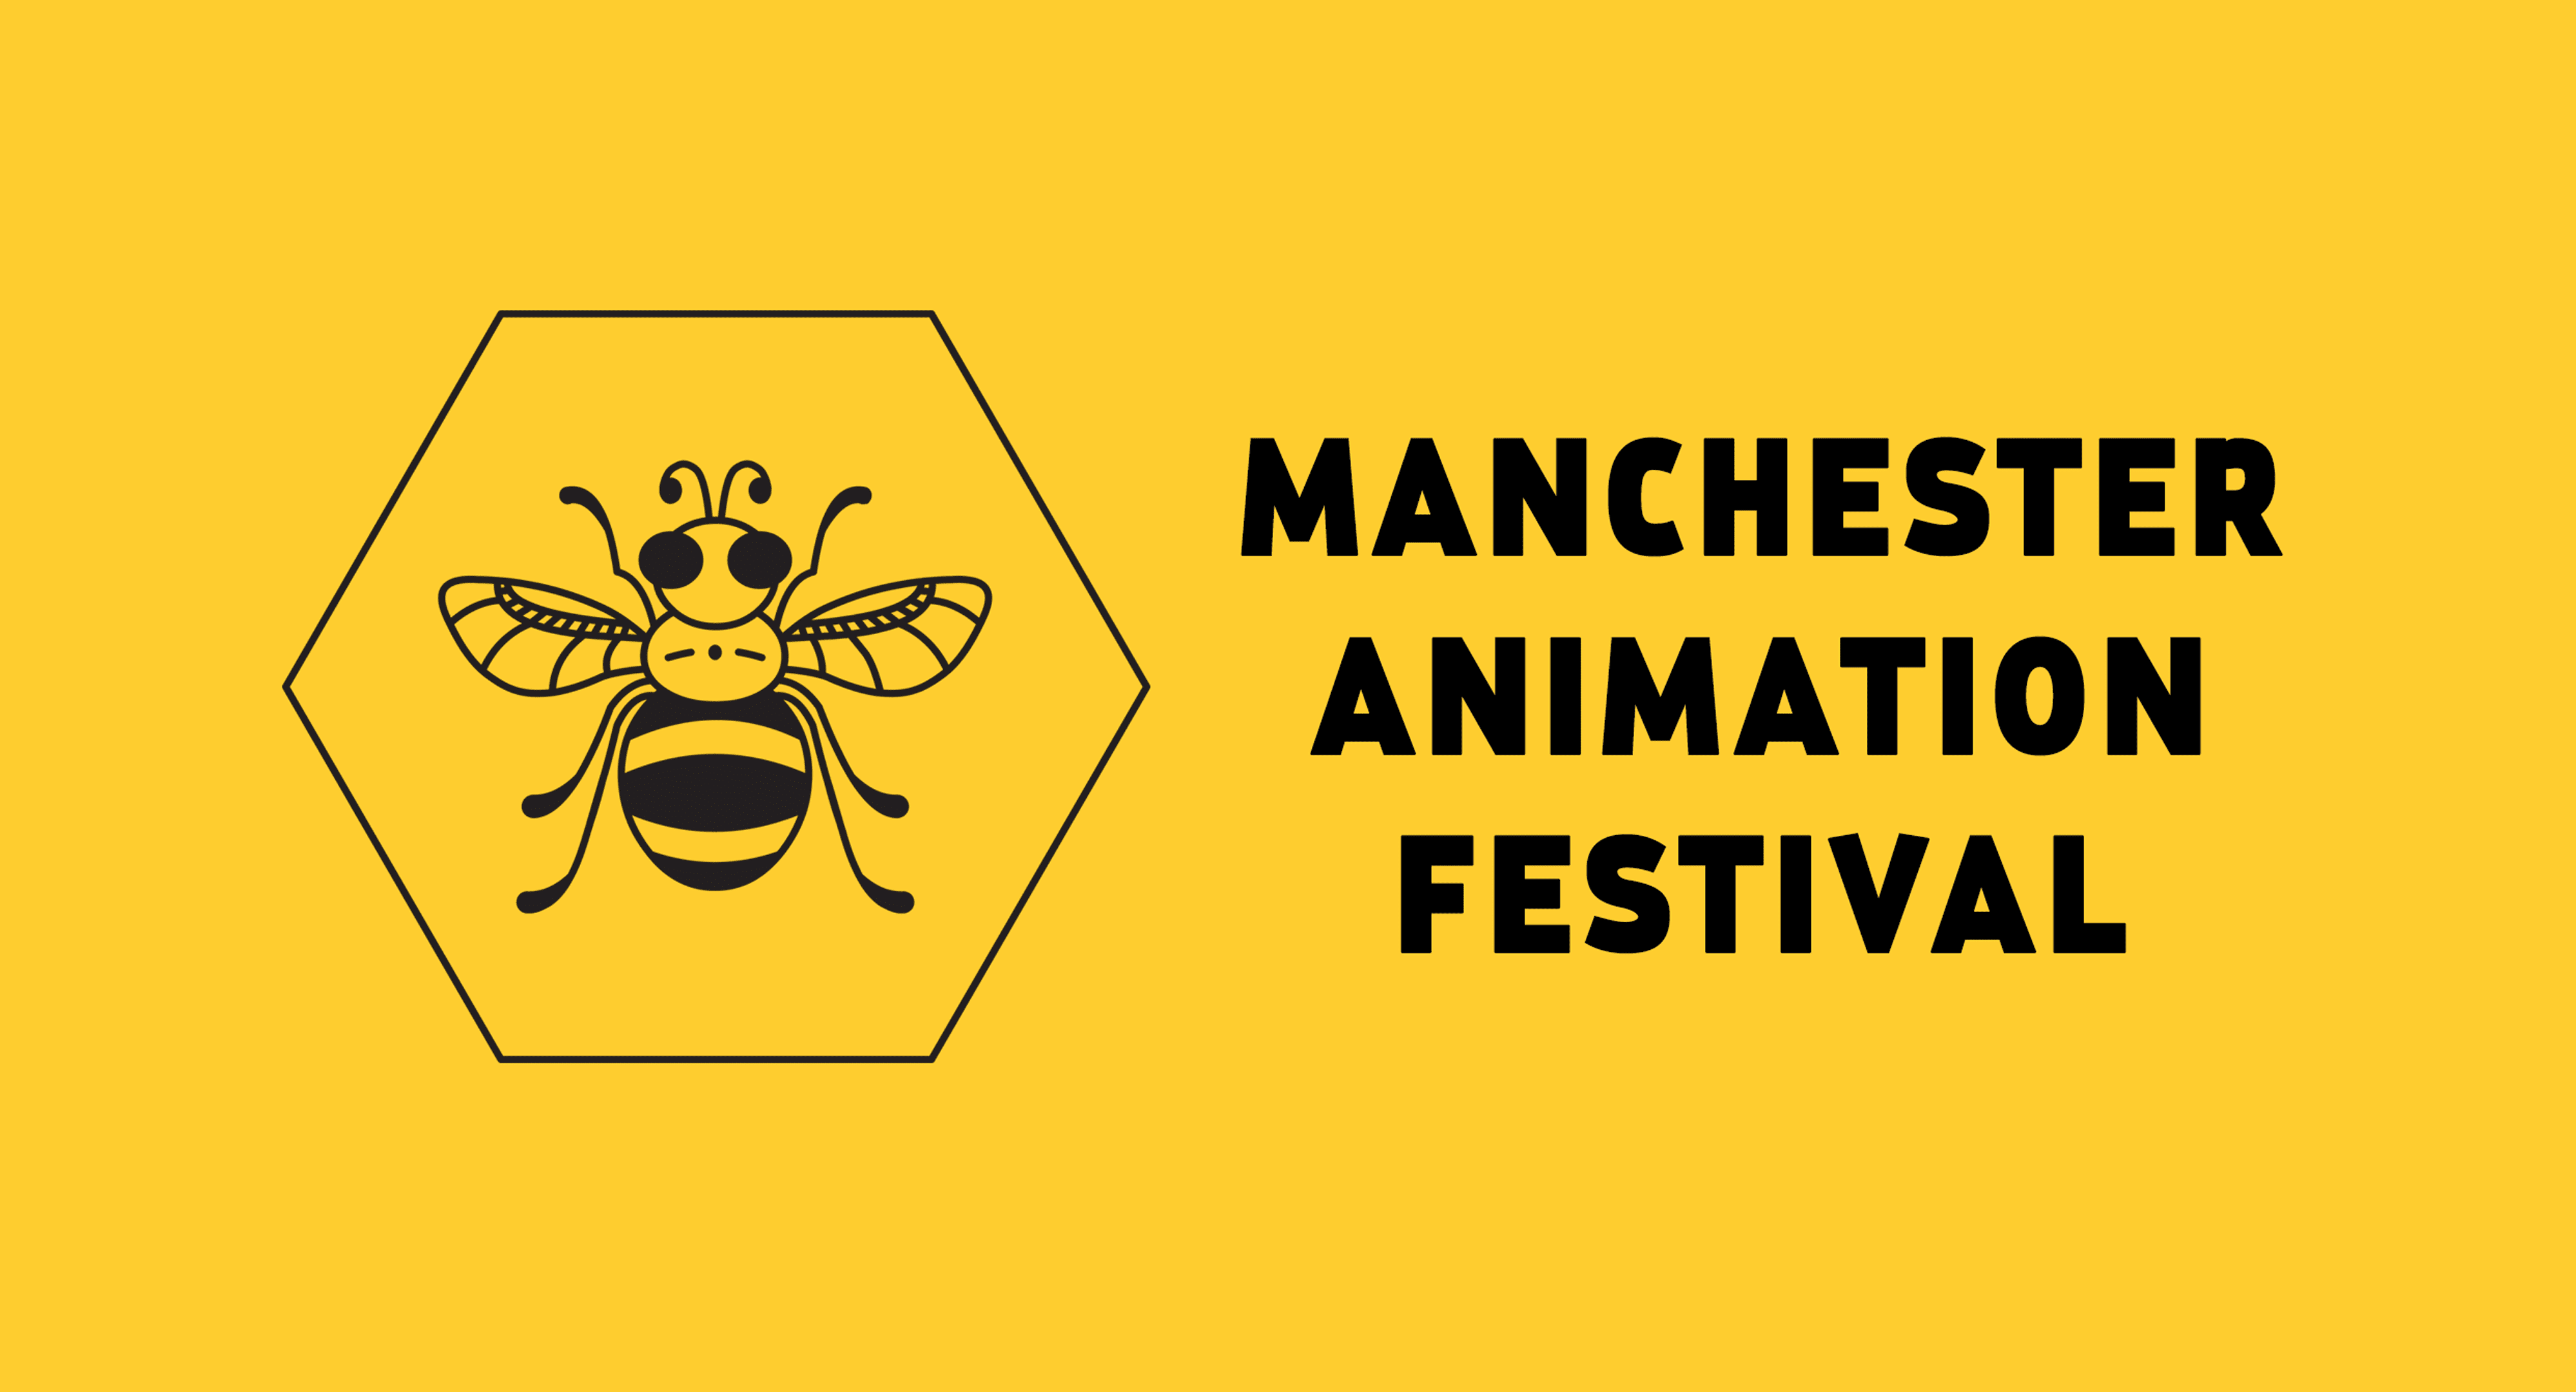 Photo: Manchester Animation Festival press